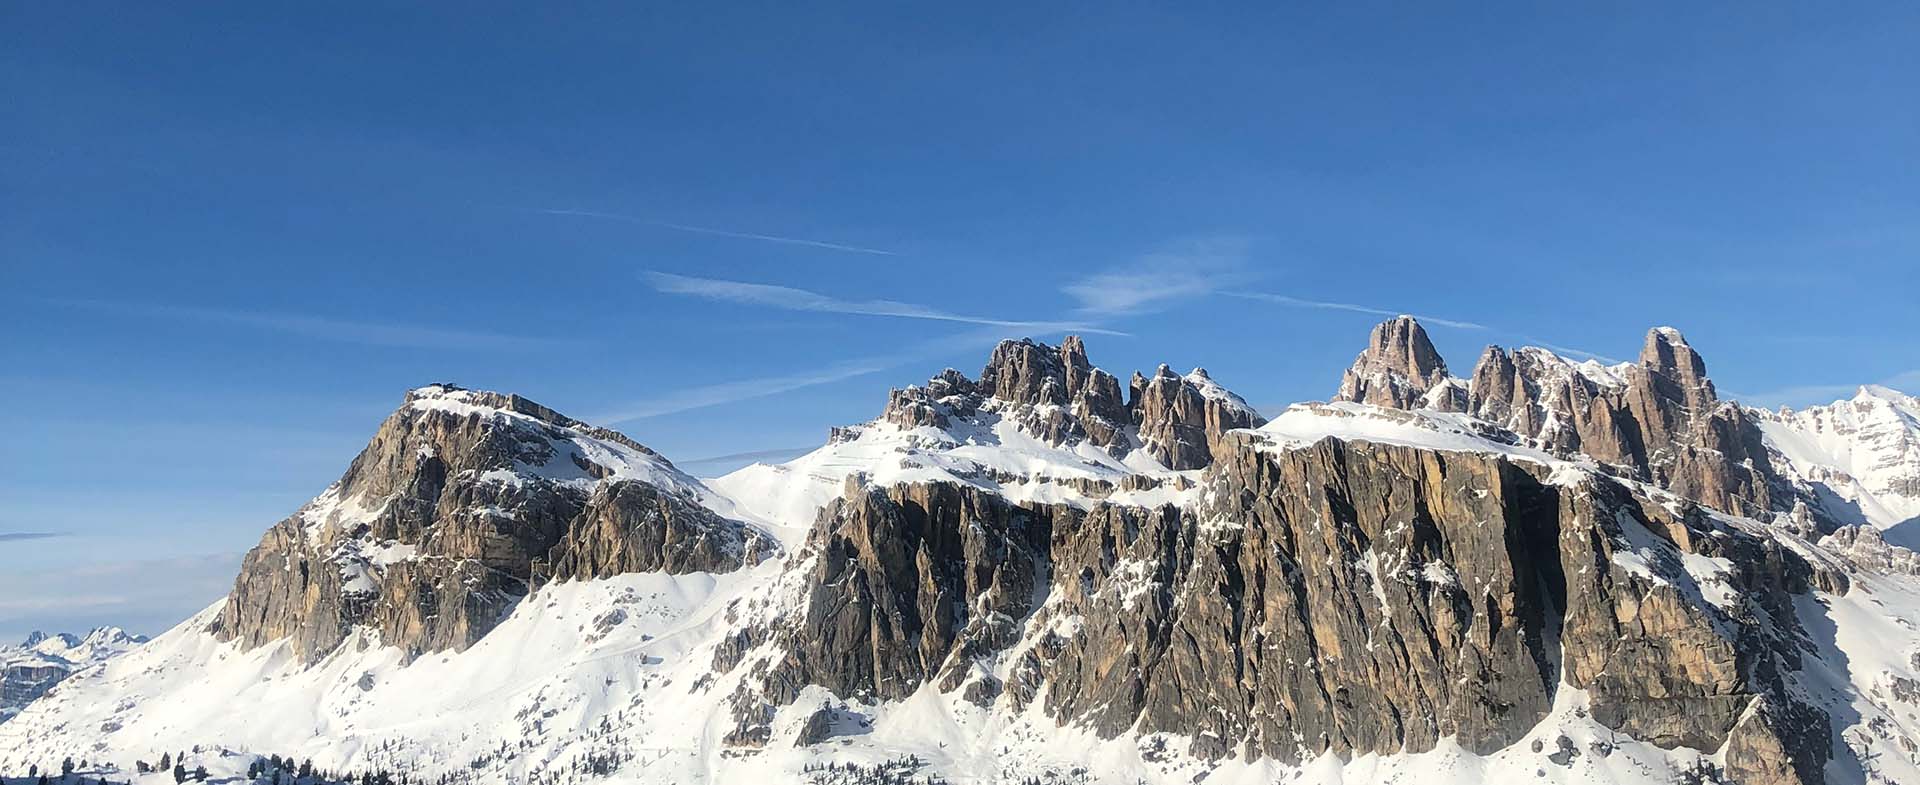 Lagazuoi view from Scoiattoli hut / Dolomites